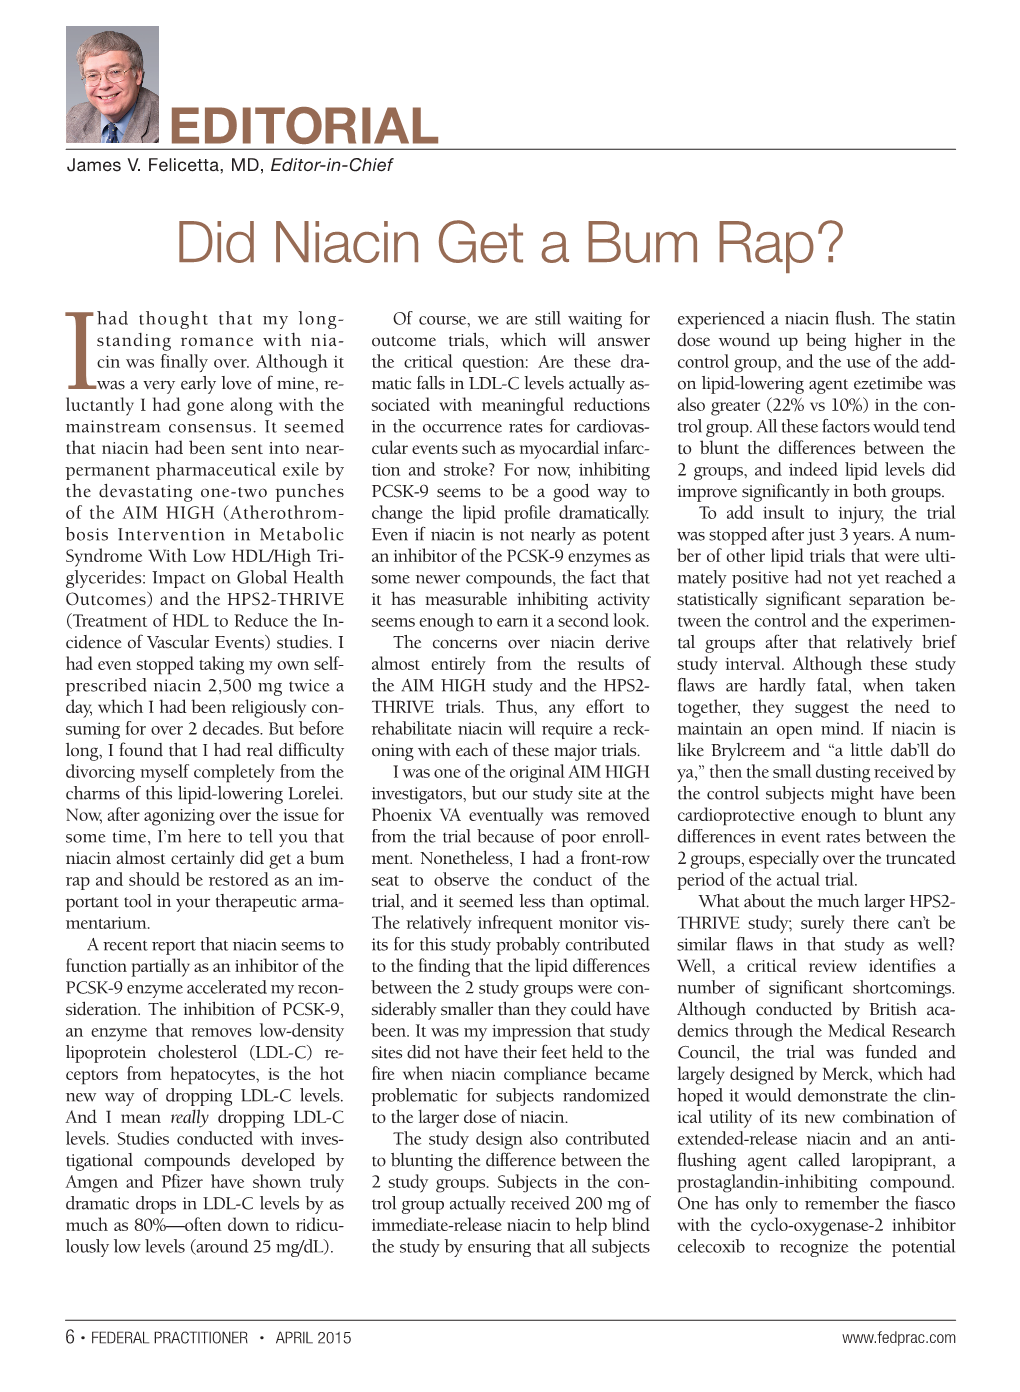 Did Niacin Get a Bum Rap?